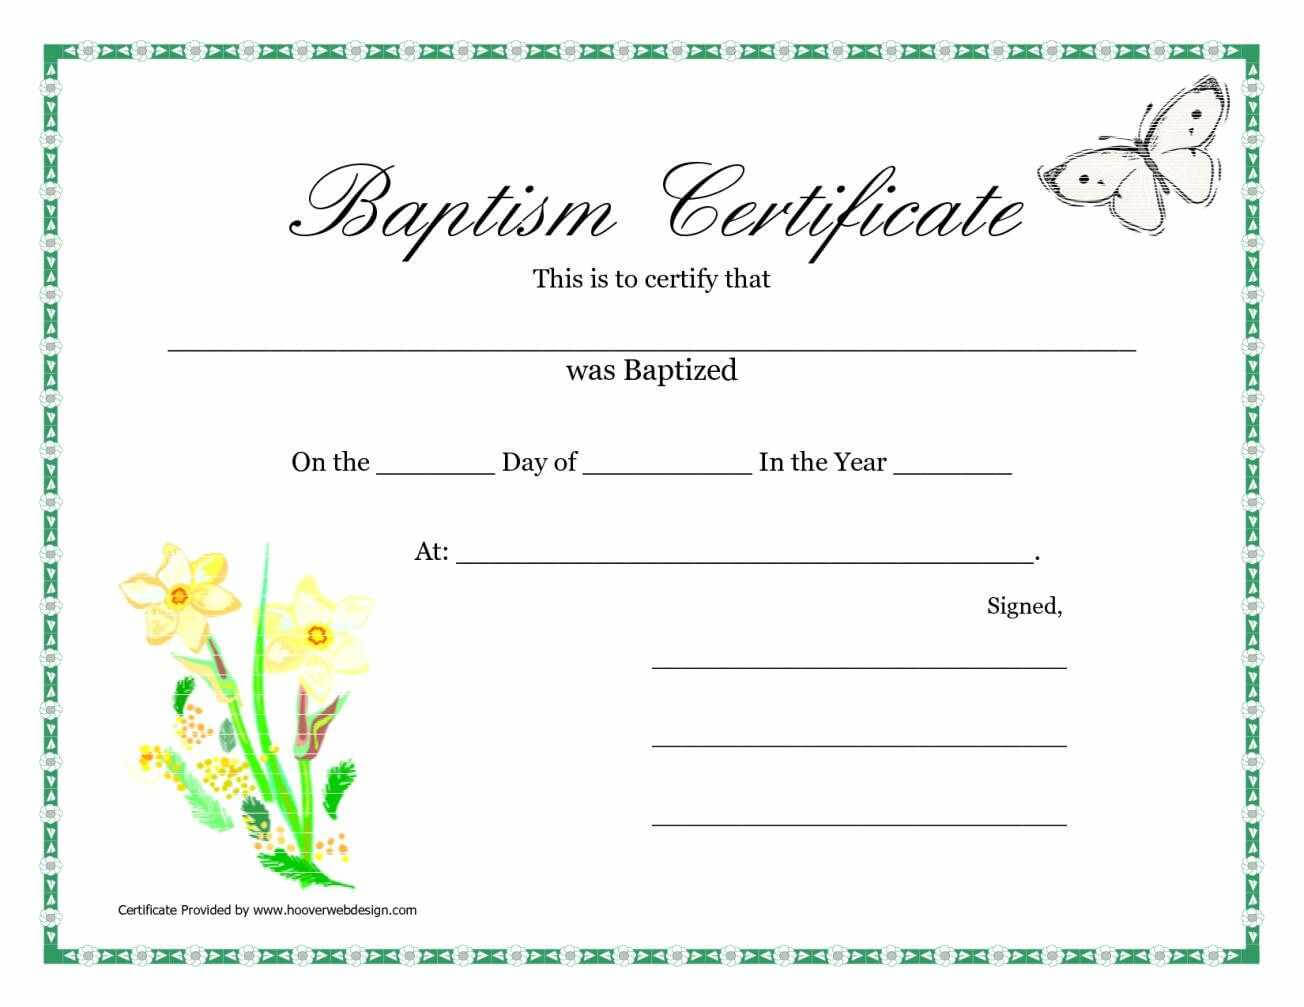 015 Template Ideas Certificate Of Baptism Unique Broadman Throughout Roman Catholic Baptism Certificate Template